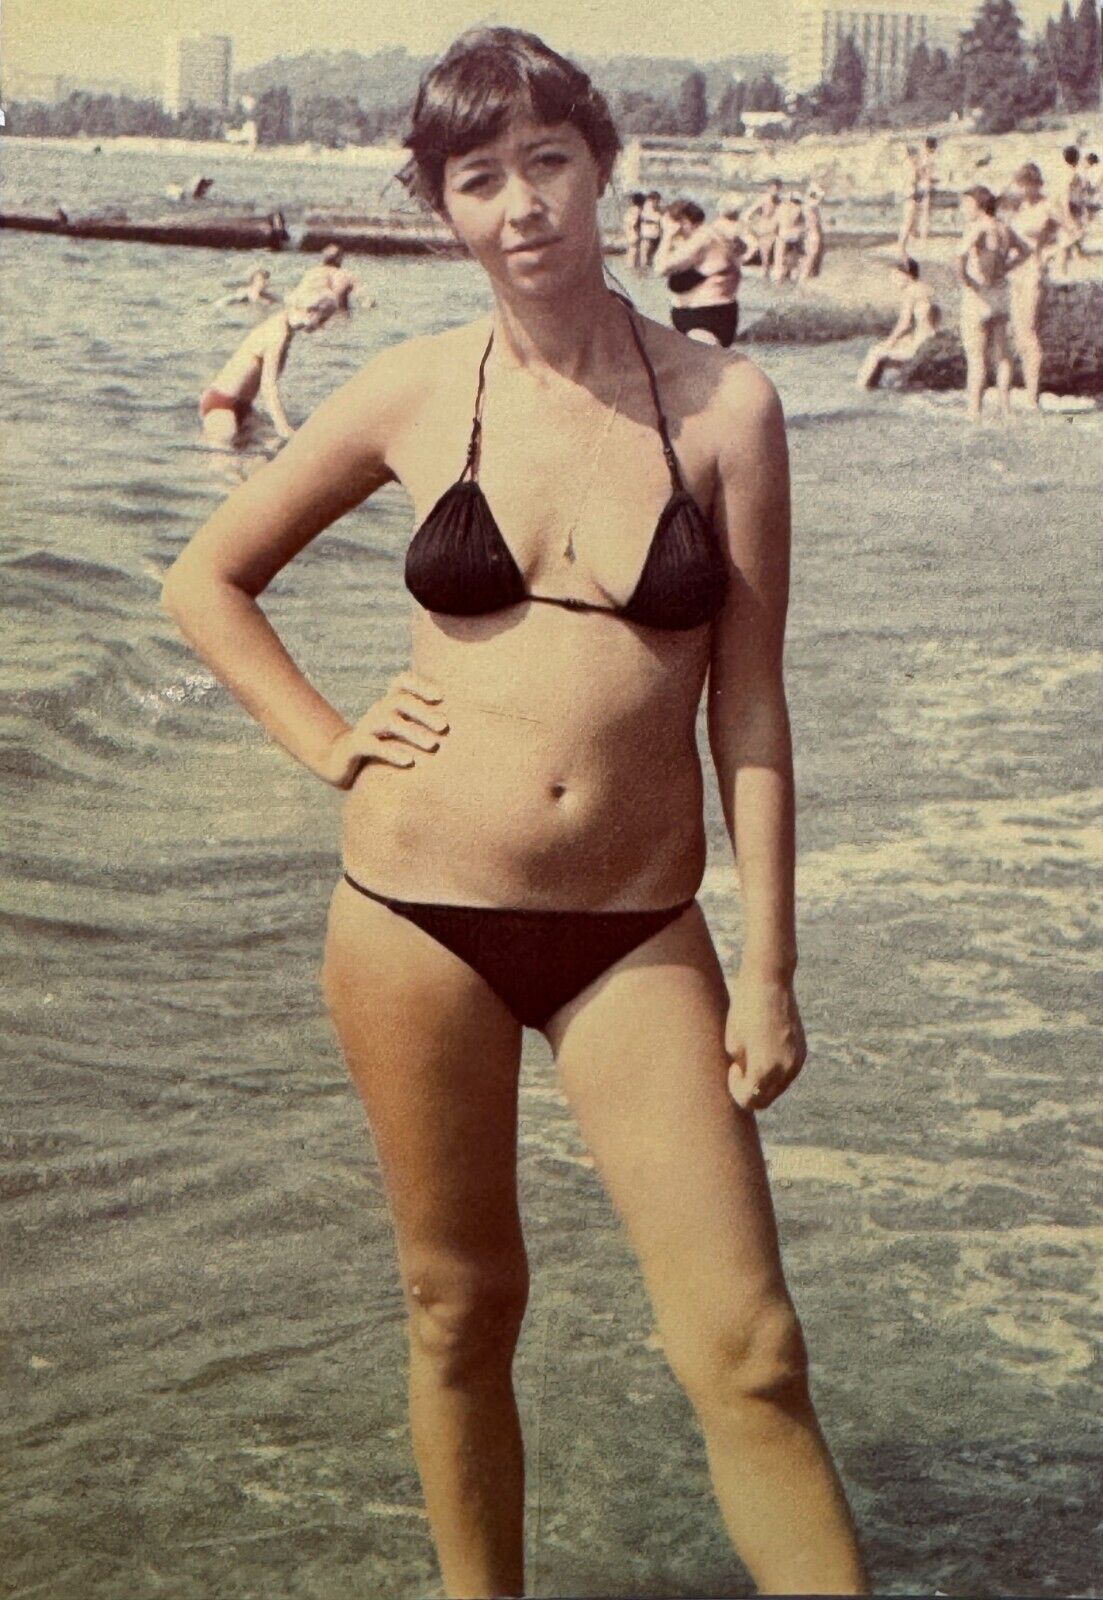 1990s Pretty Young Woman Bikini Beach Female Hands on waist Vintage Photo